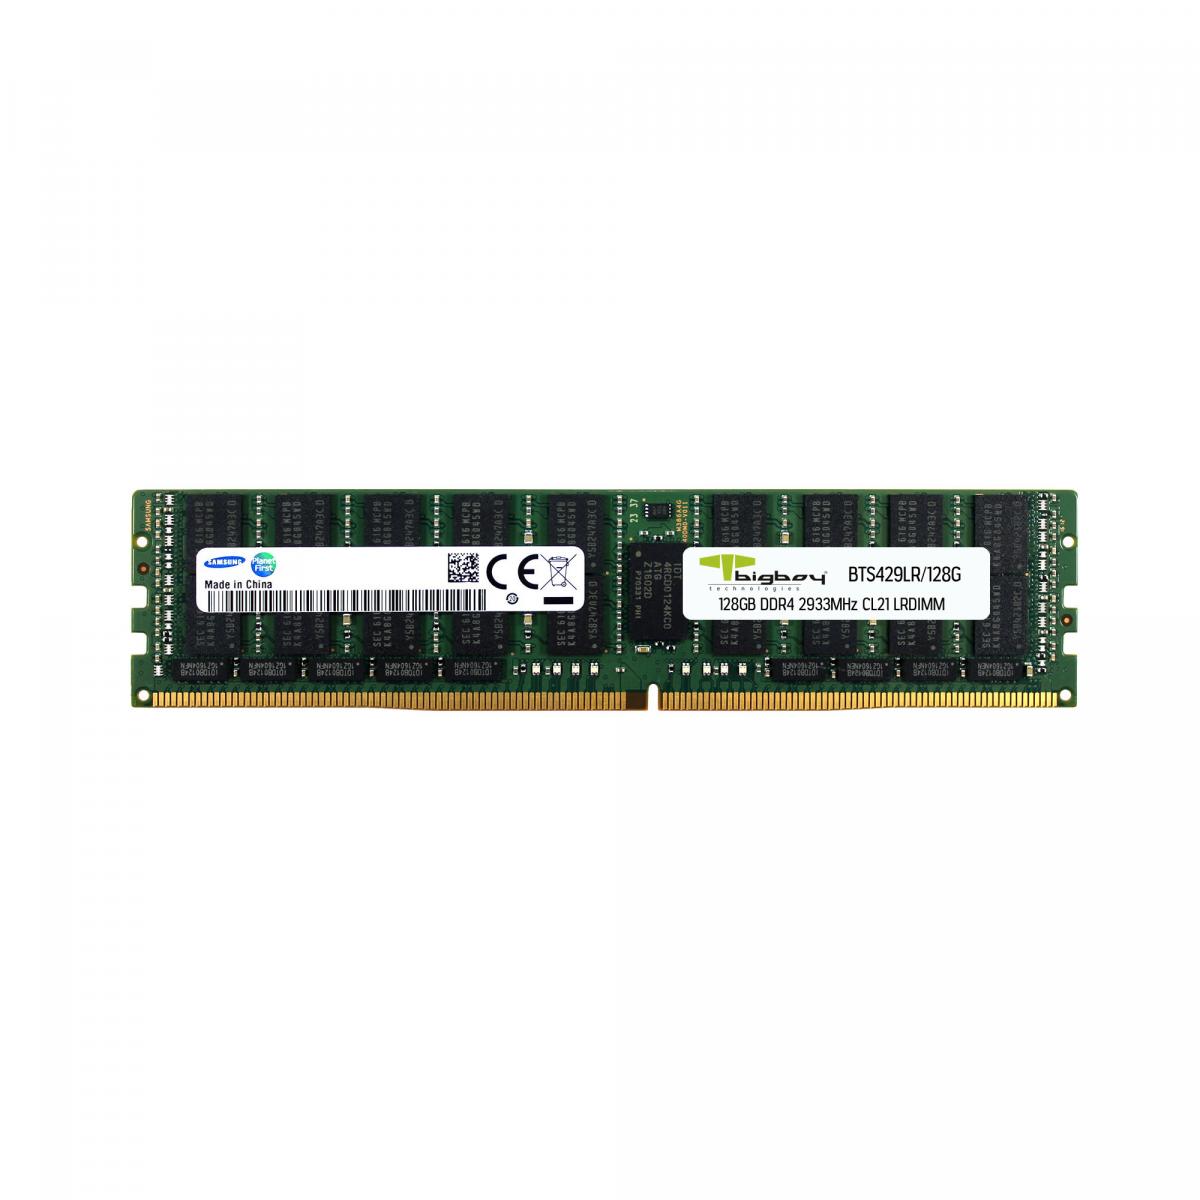 Bigboy 128GB DDR4 2933MHz CL21 LRDIMM Server Rami BTS429LR/128G